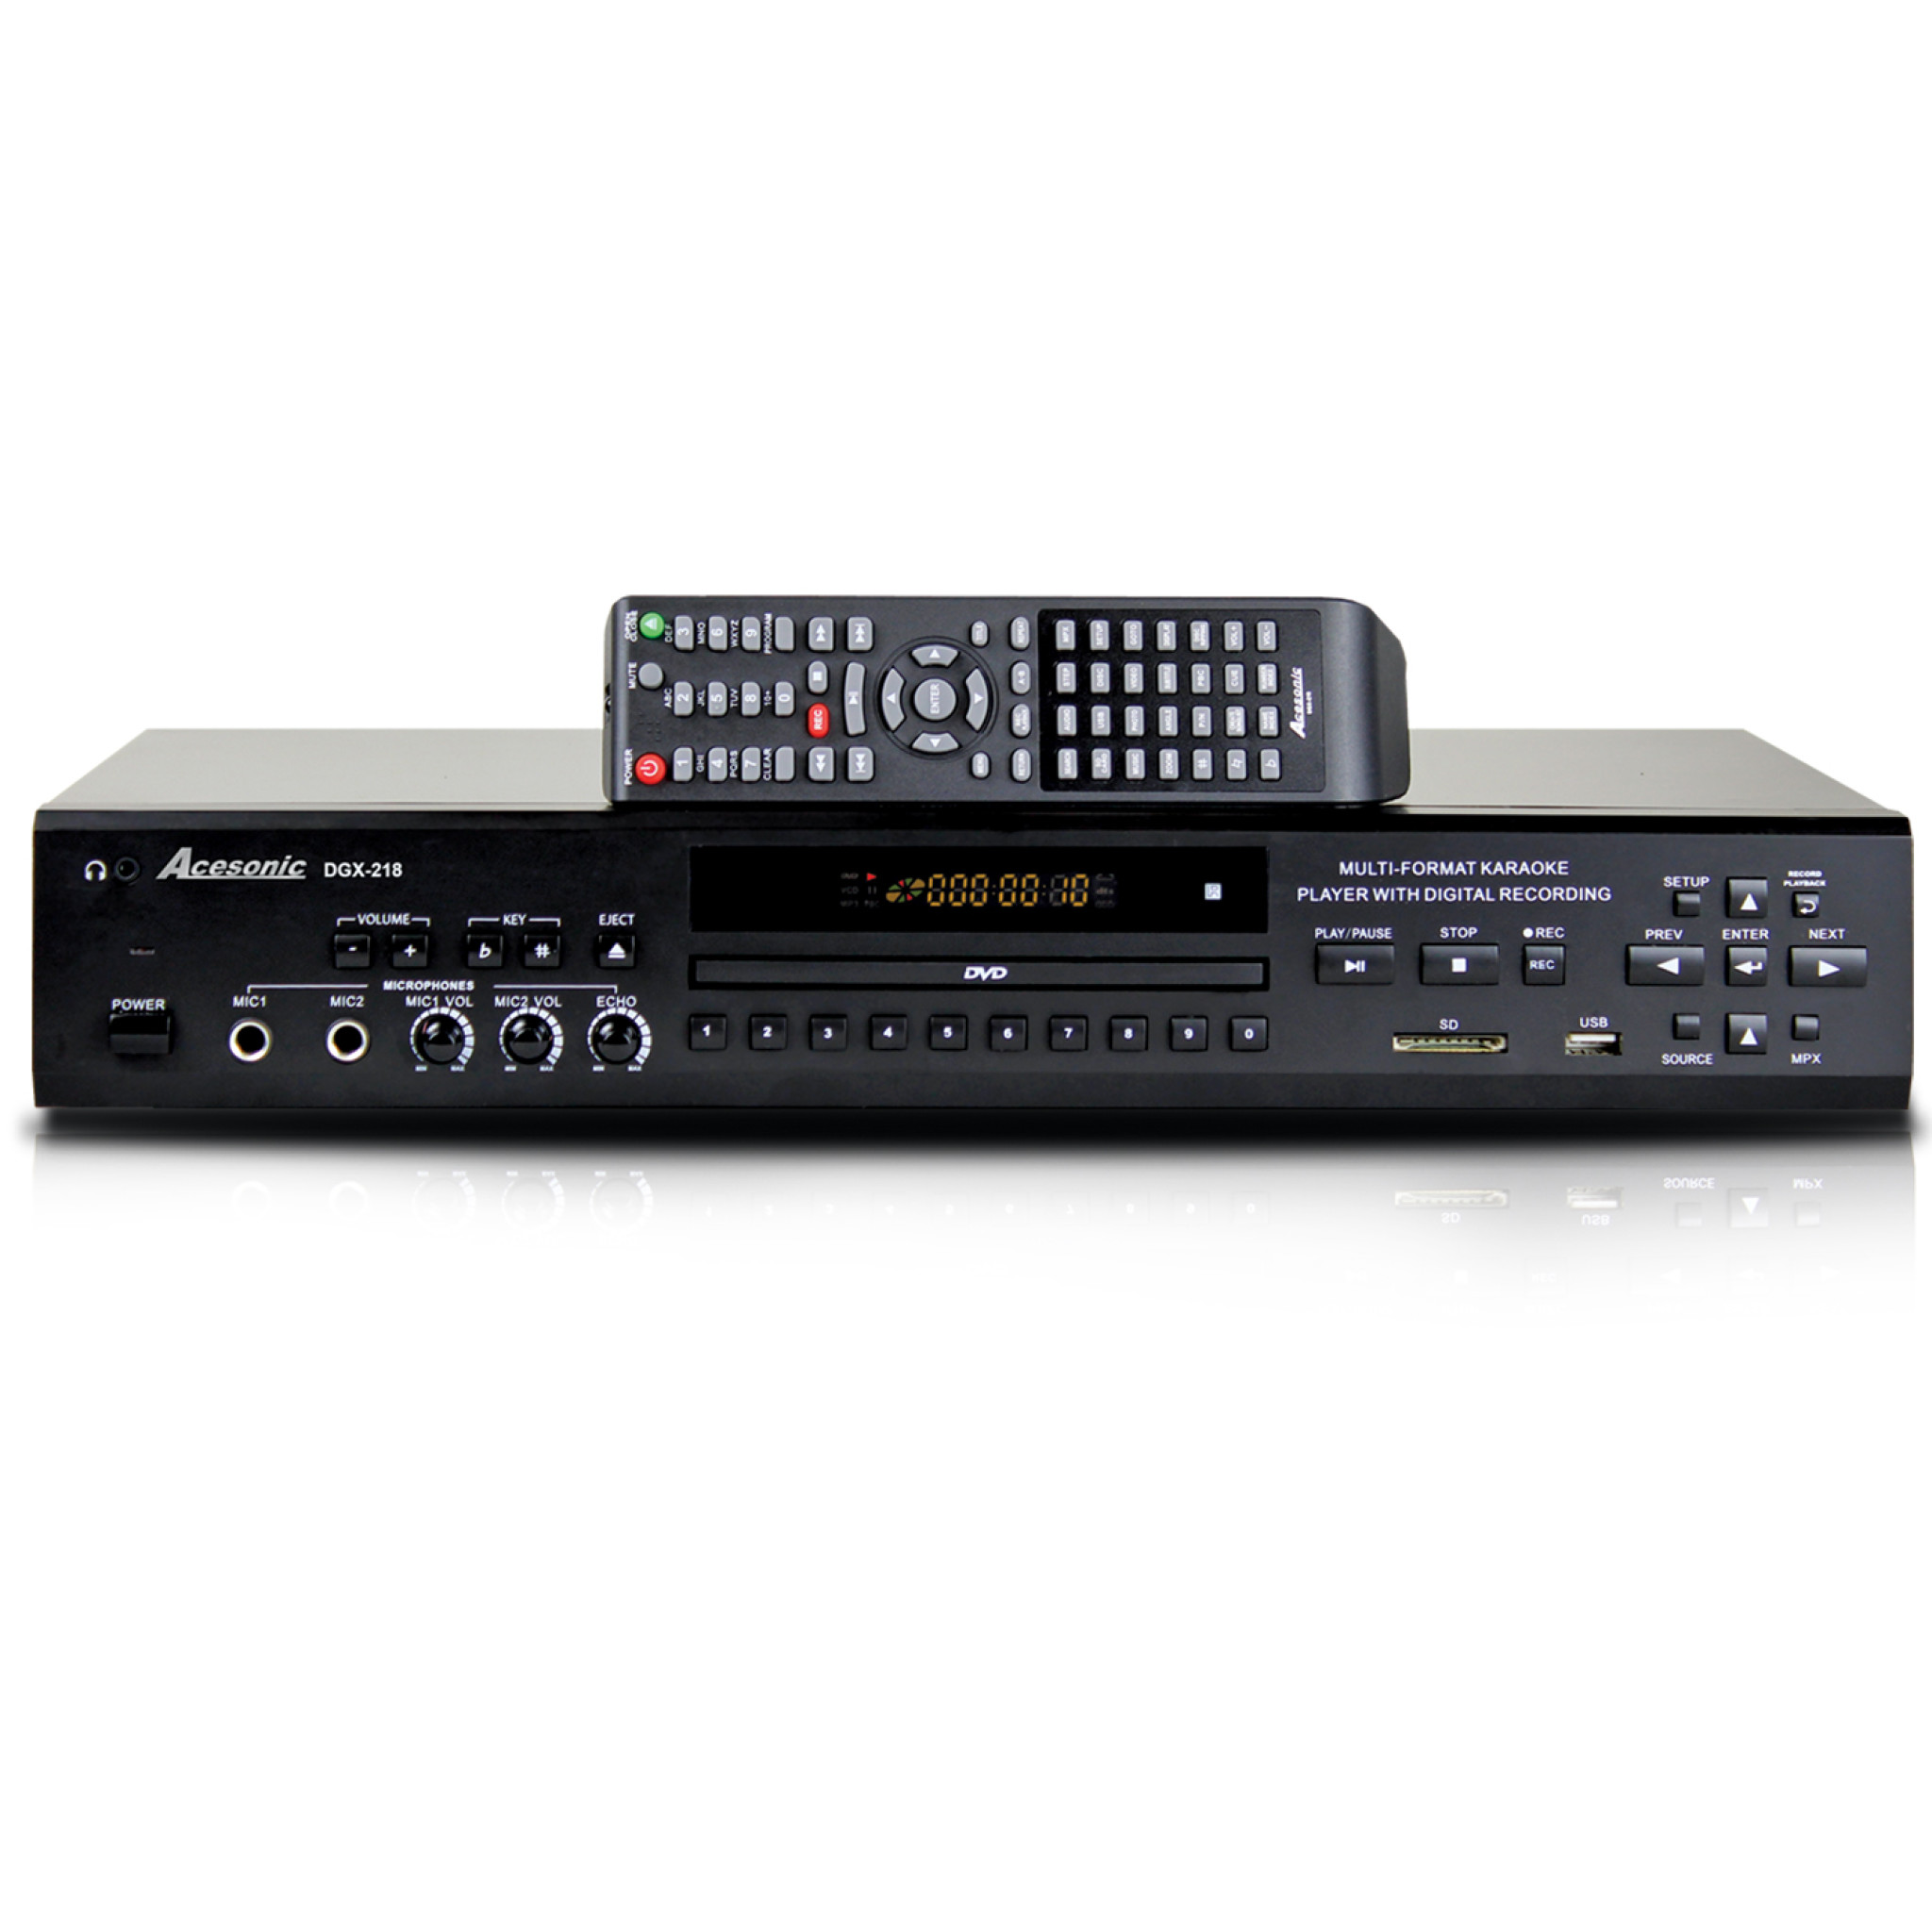 acesonic-dgx-218-hdmi-multi-format-karaoke-player-18.jpg